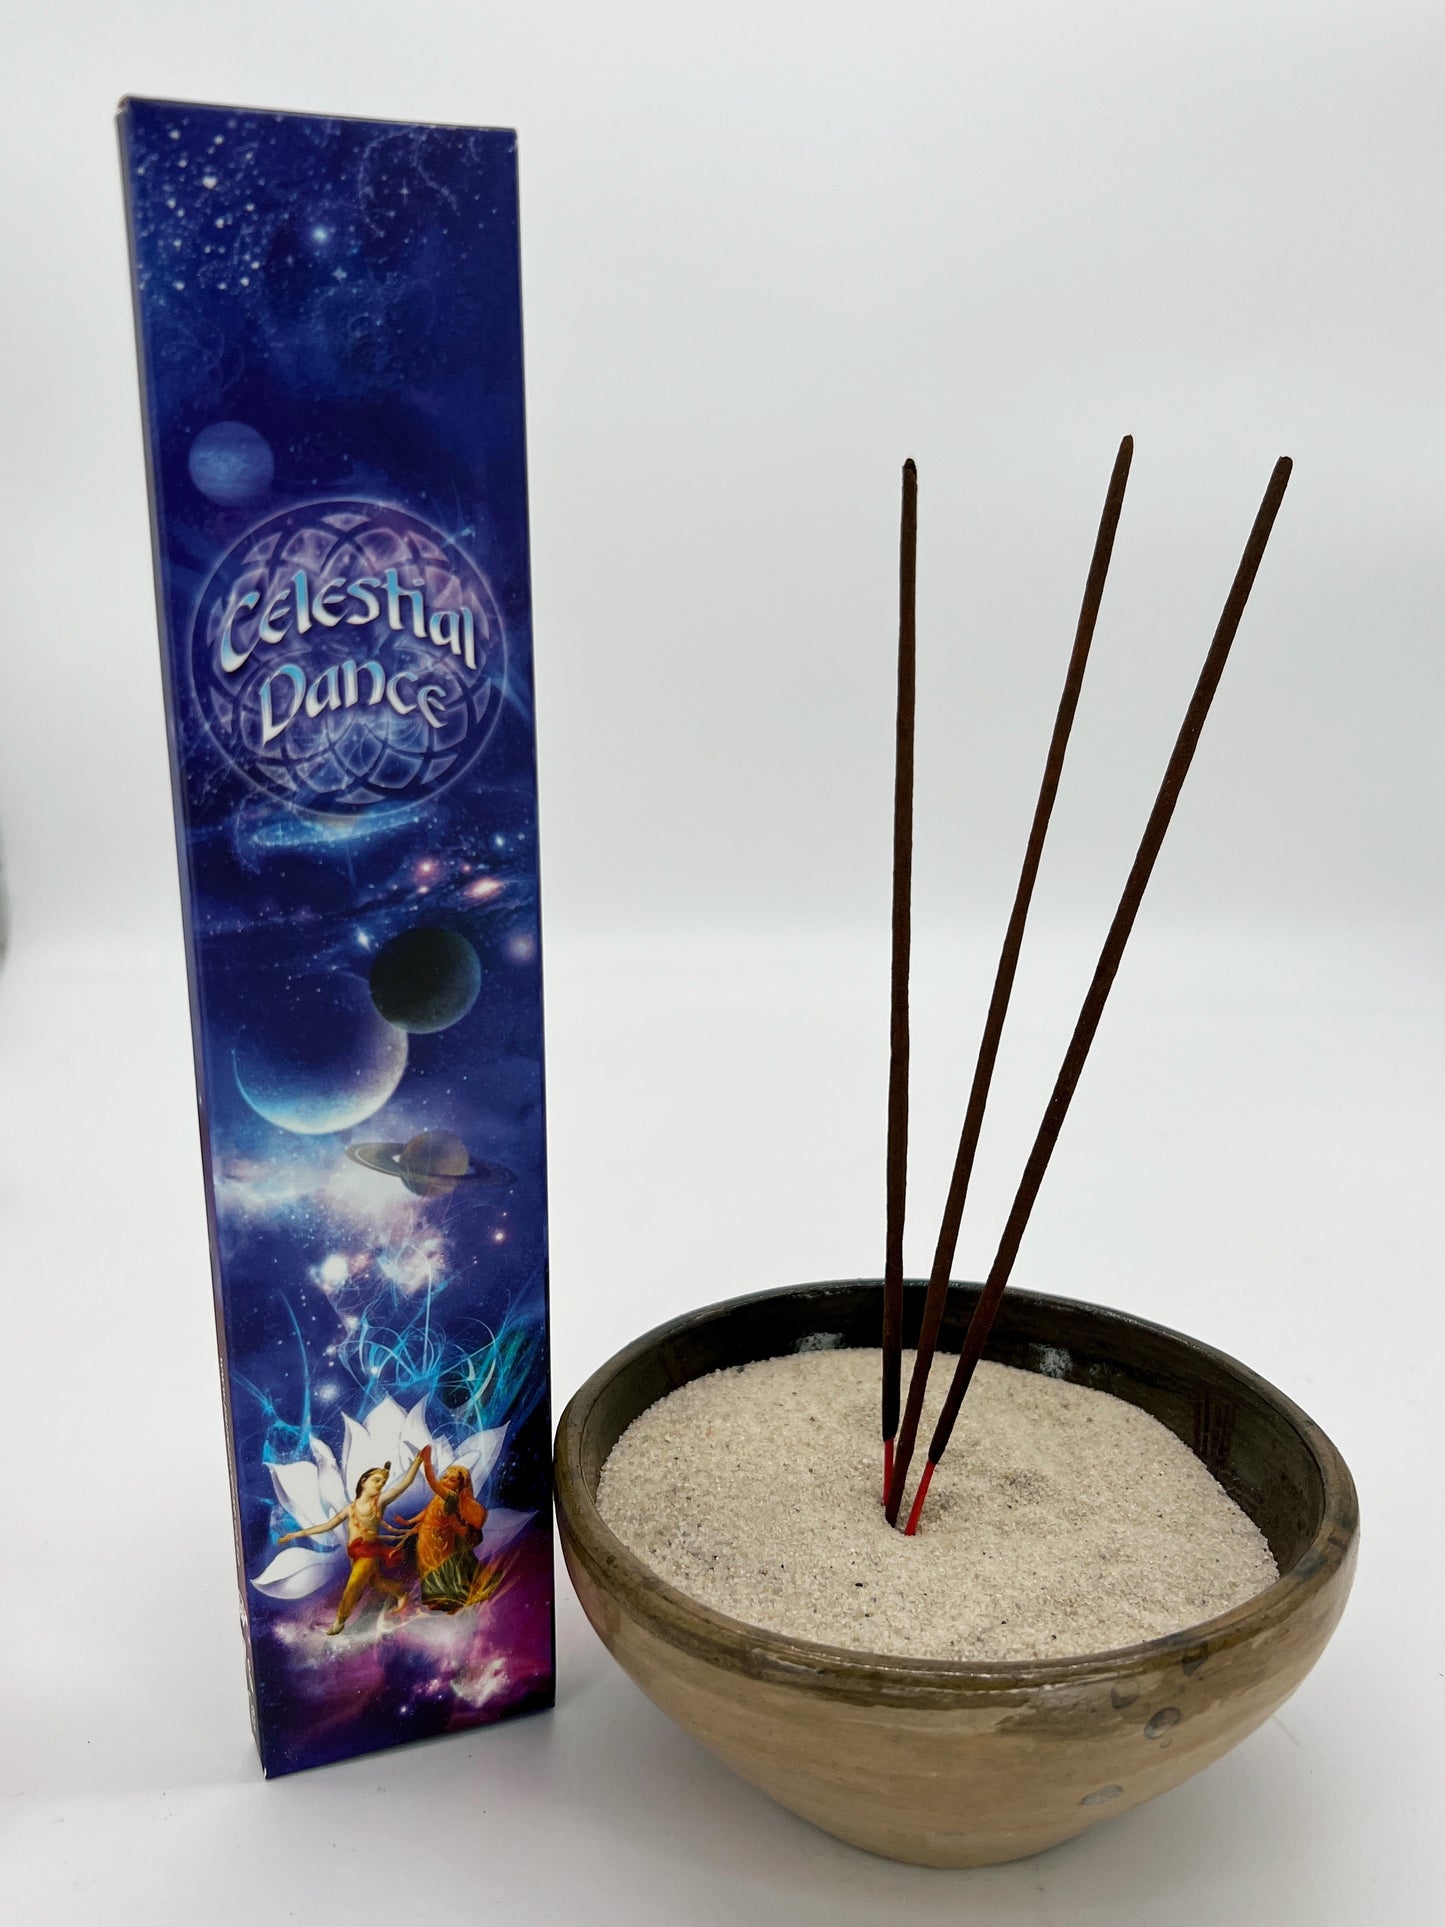 Incense Sticks "Celestial Dance"